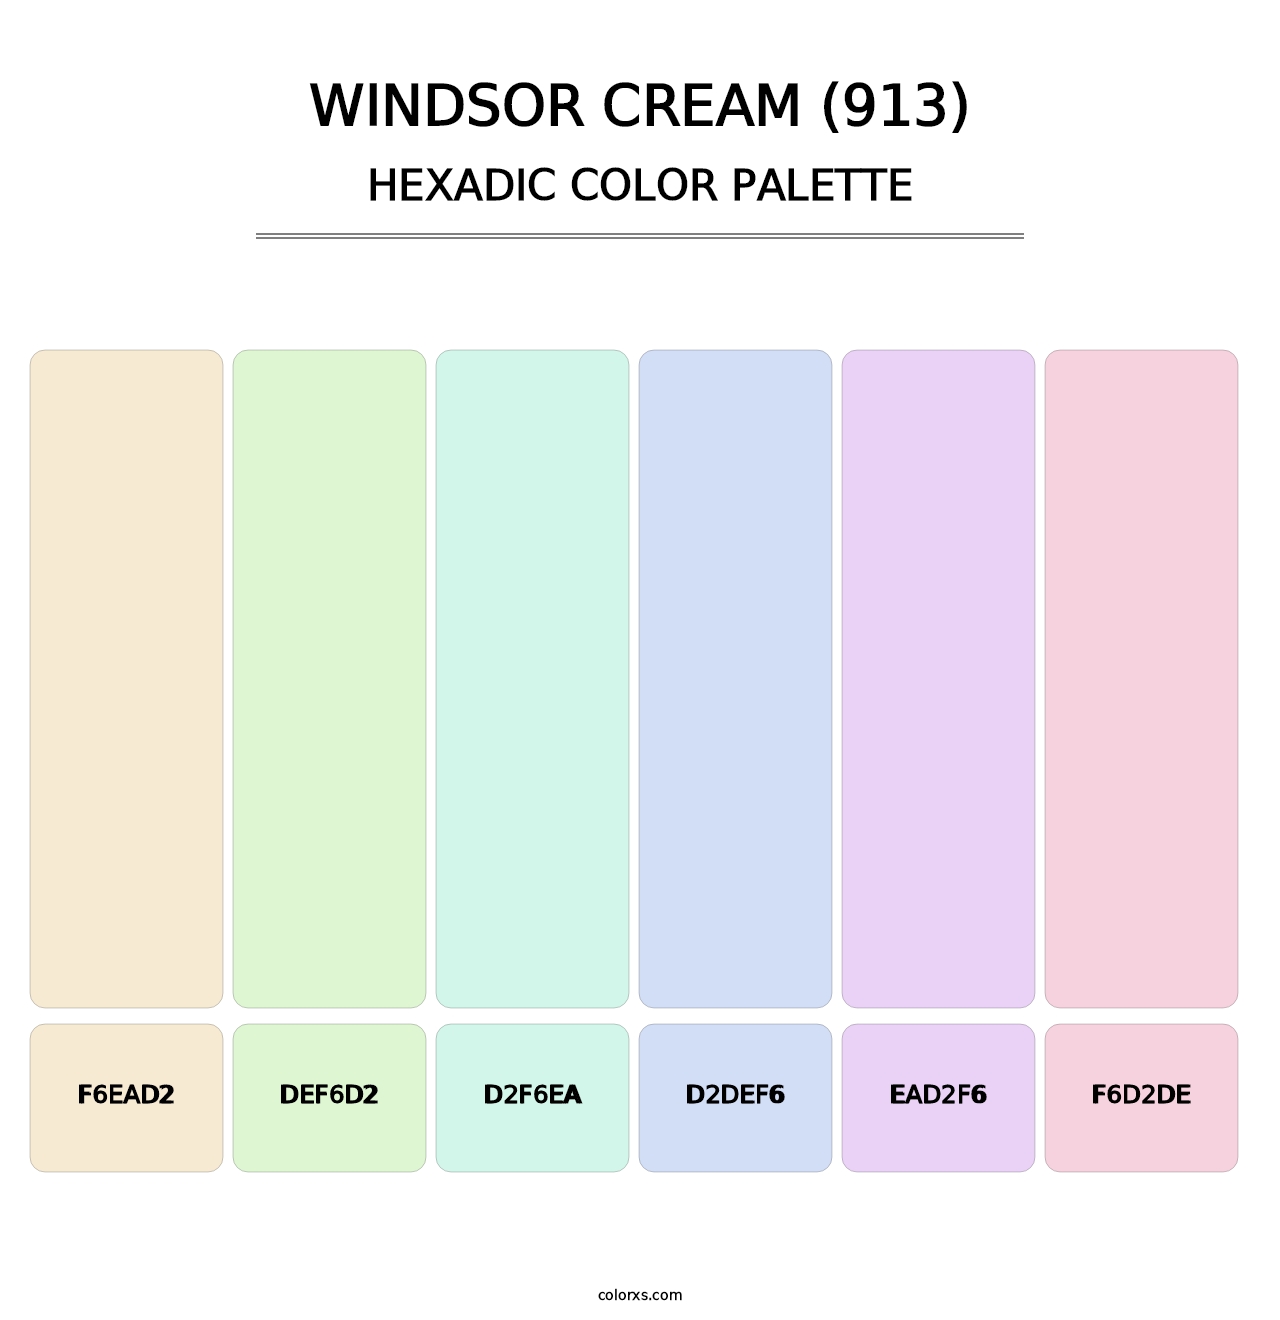 Windsor Cream (913) - Hexadic Color Palette